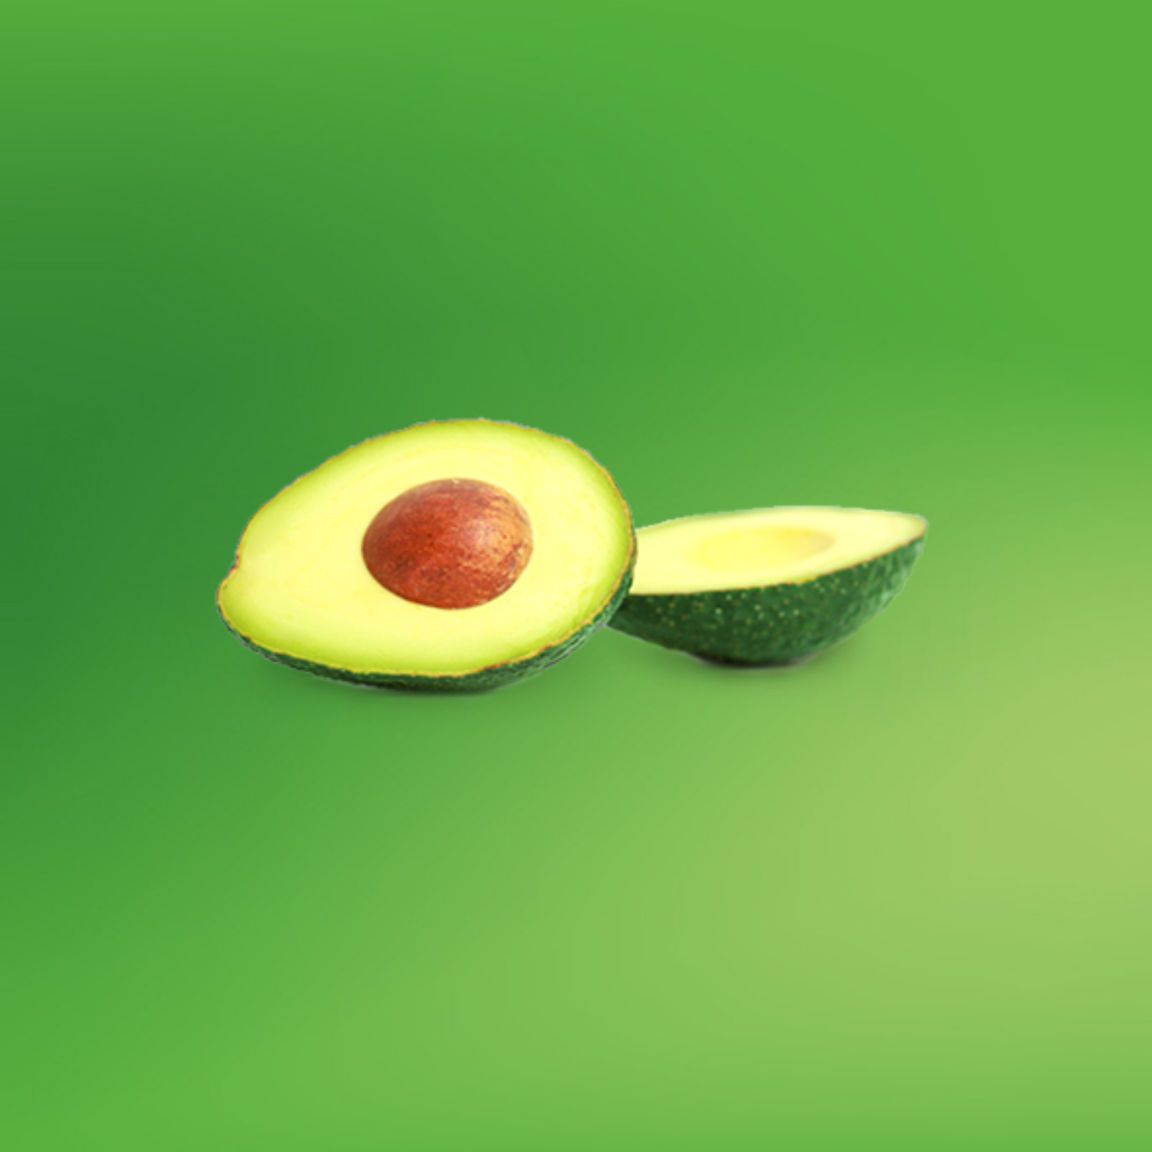 An avocado is shown on a green background - Avocado